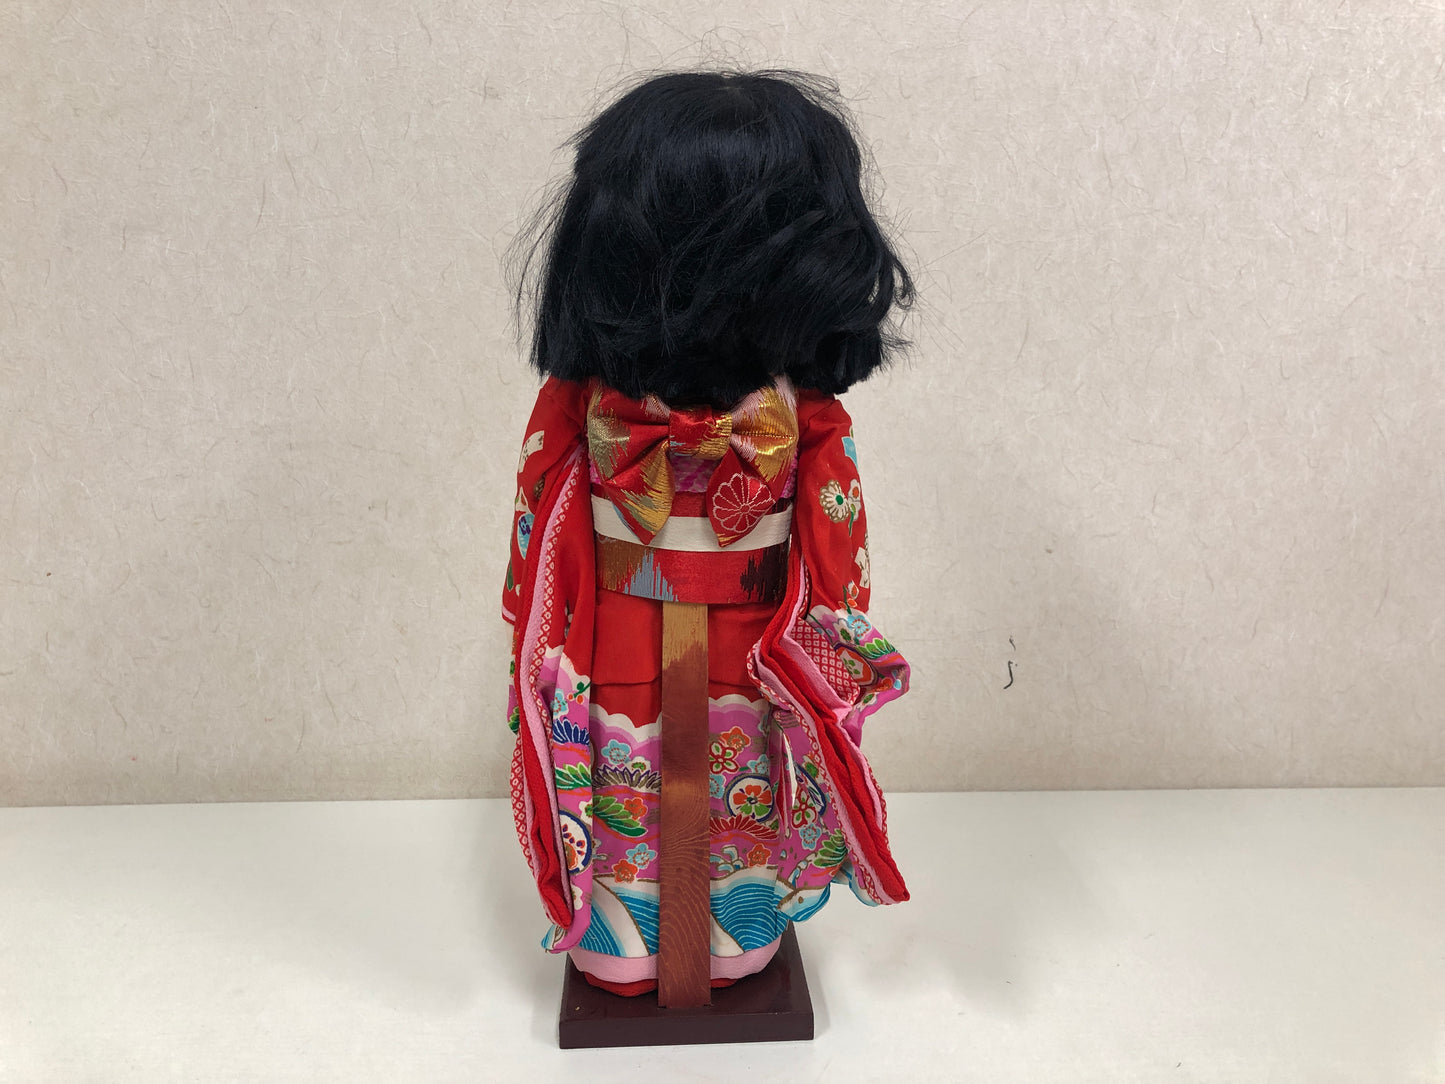 Y3952 NINGYO Ichimatsu Doll girl box Japan vintage figure antique interior decor